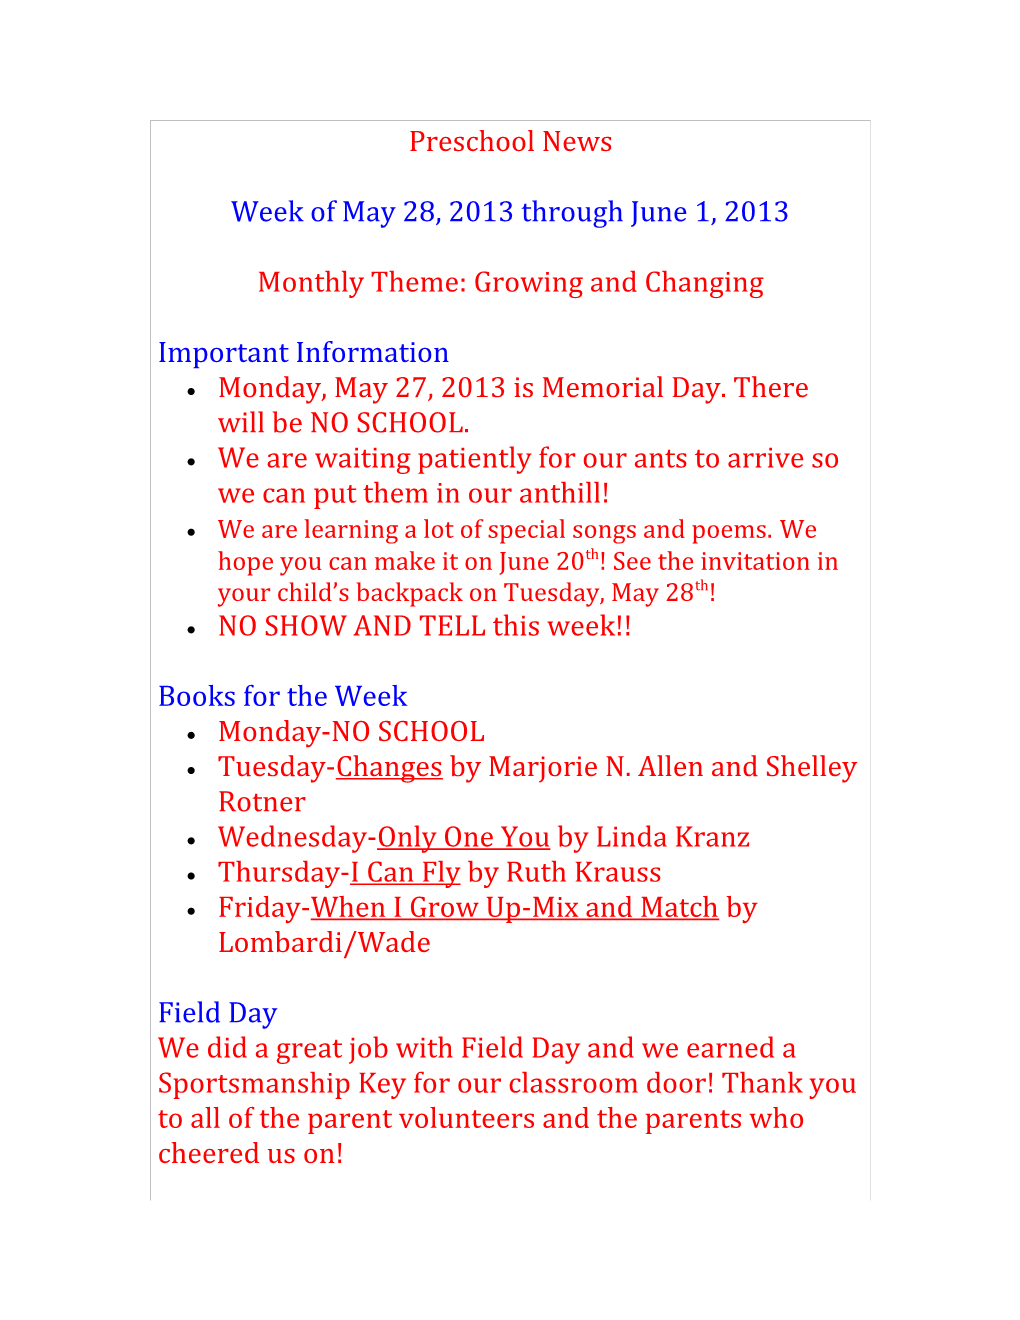 Week of May 28, 2013 Through June 1, 2013